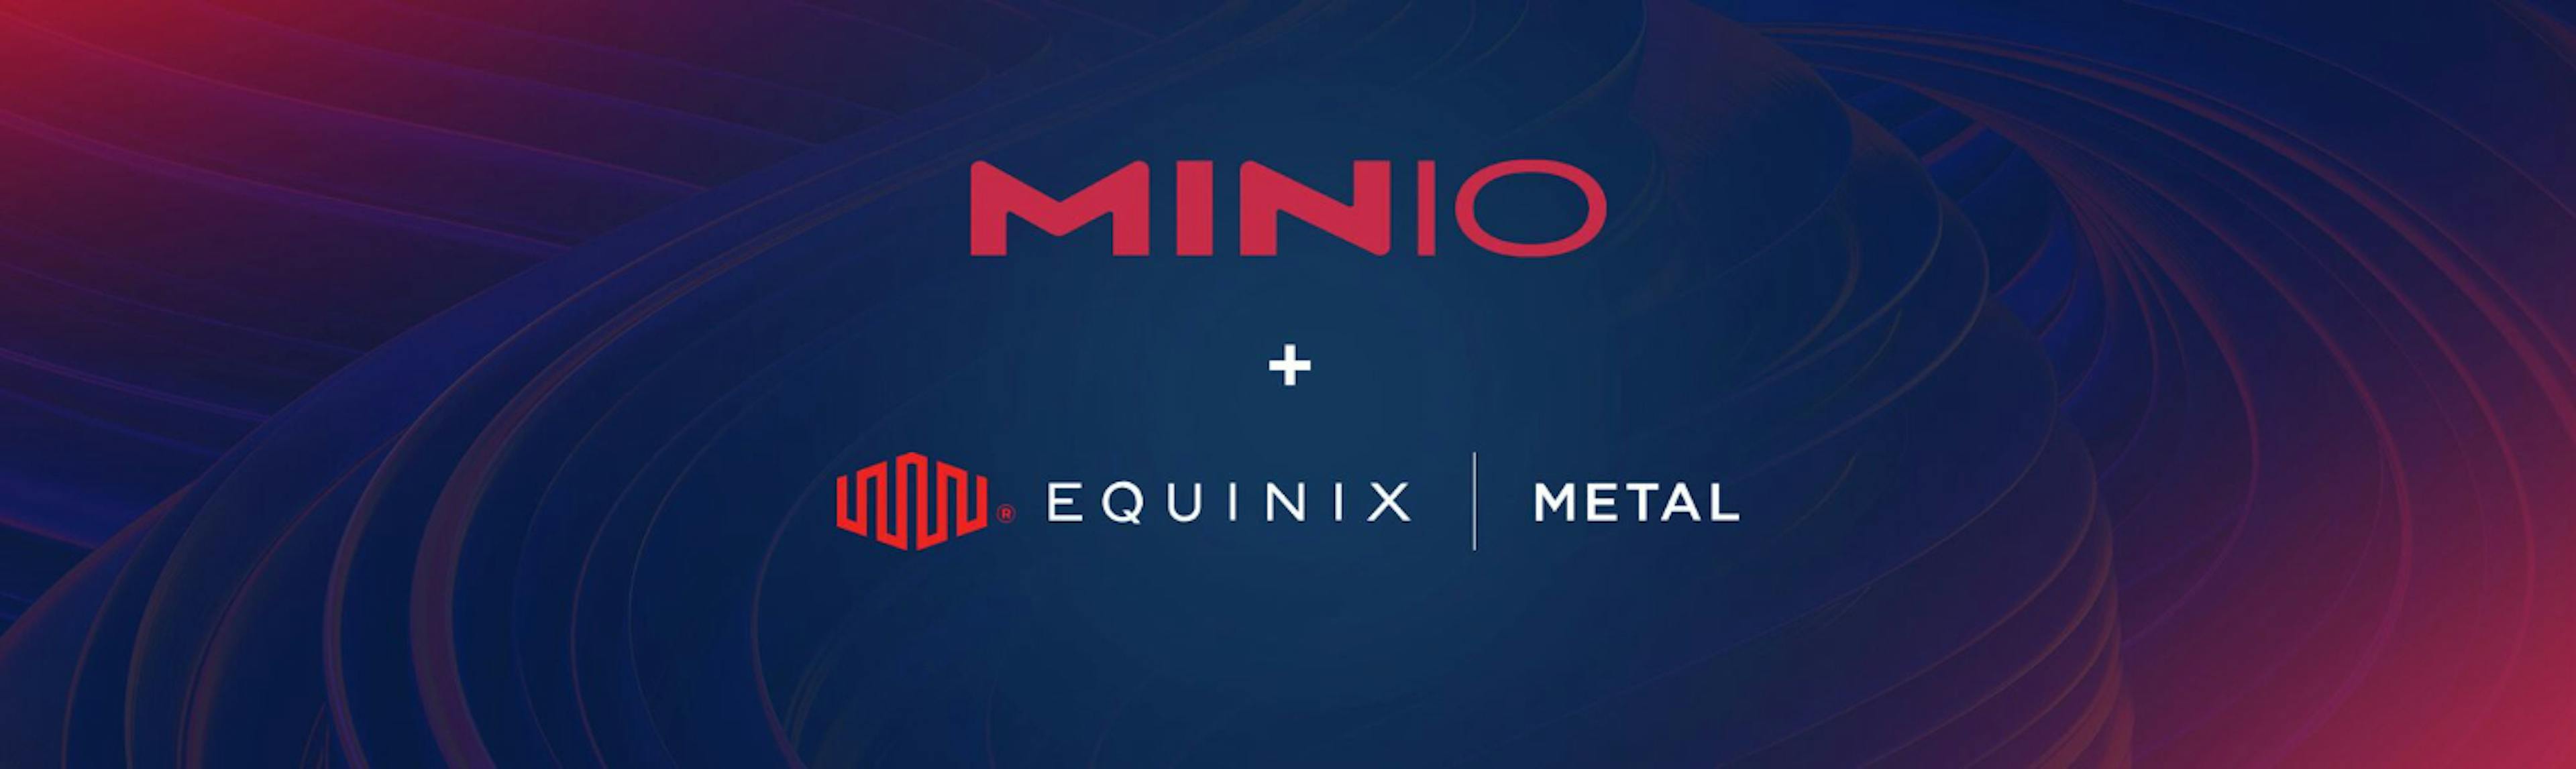 featured image - Как перейти с AWS S3 на MinIO на Equinix Metal